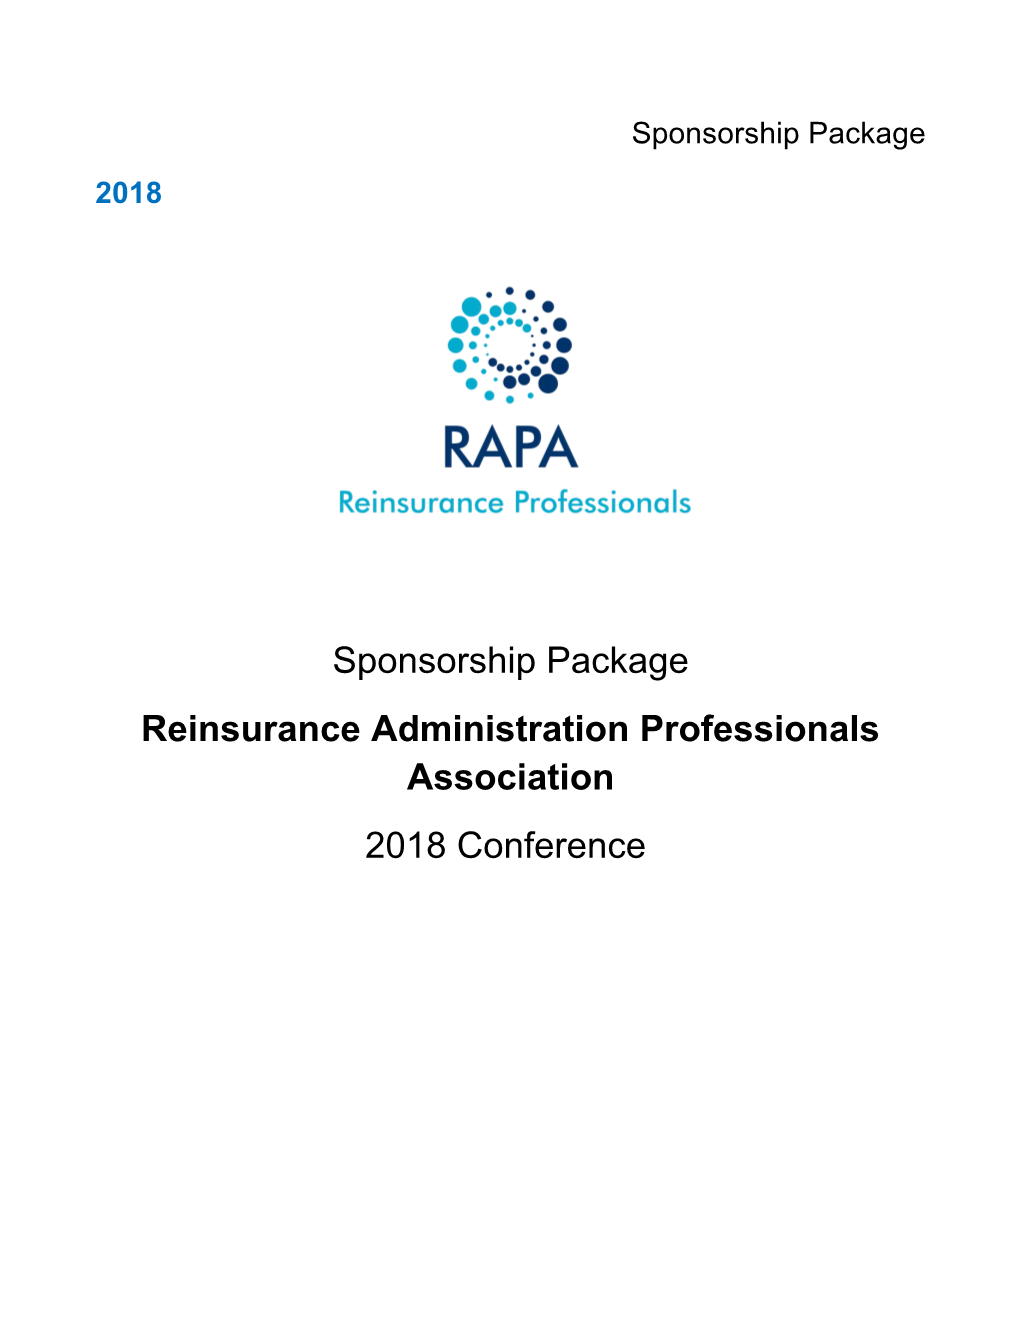 Reinsurance Administration Professionals Association